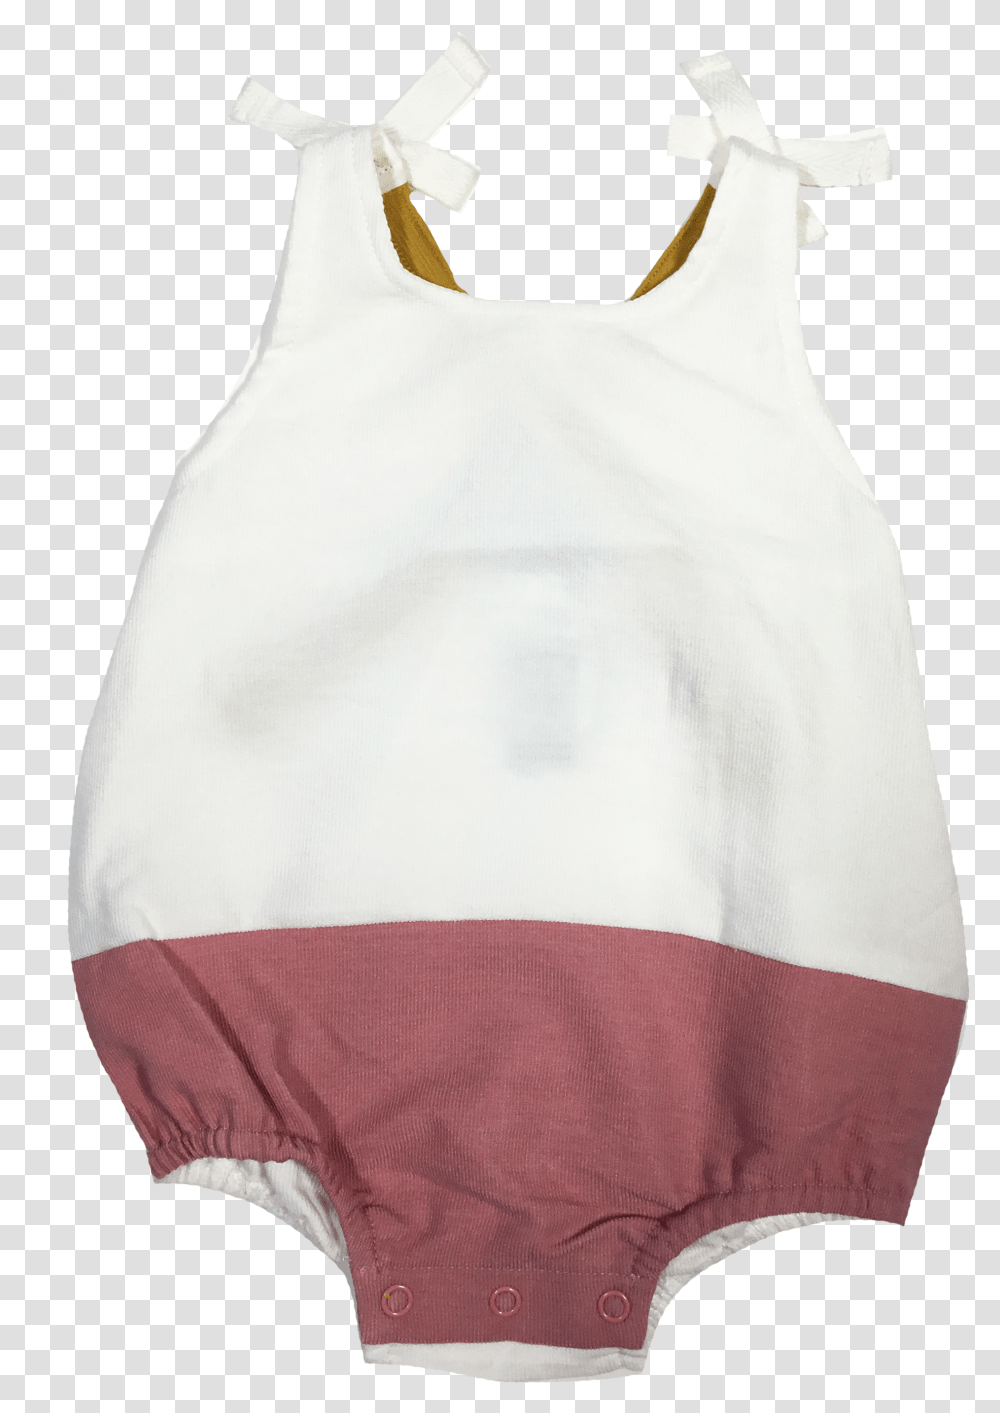 One Piece Swimsuit, Apparel, Undershirt, Tank Top Transparent Png